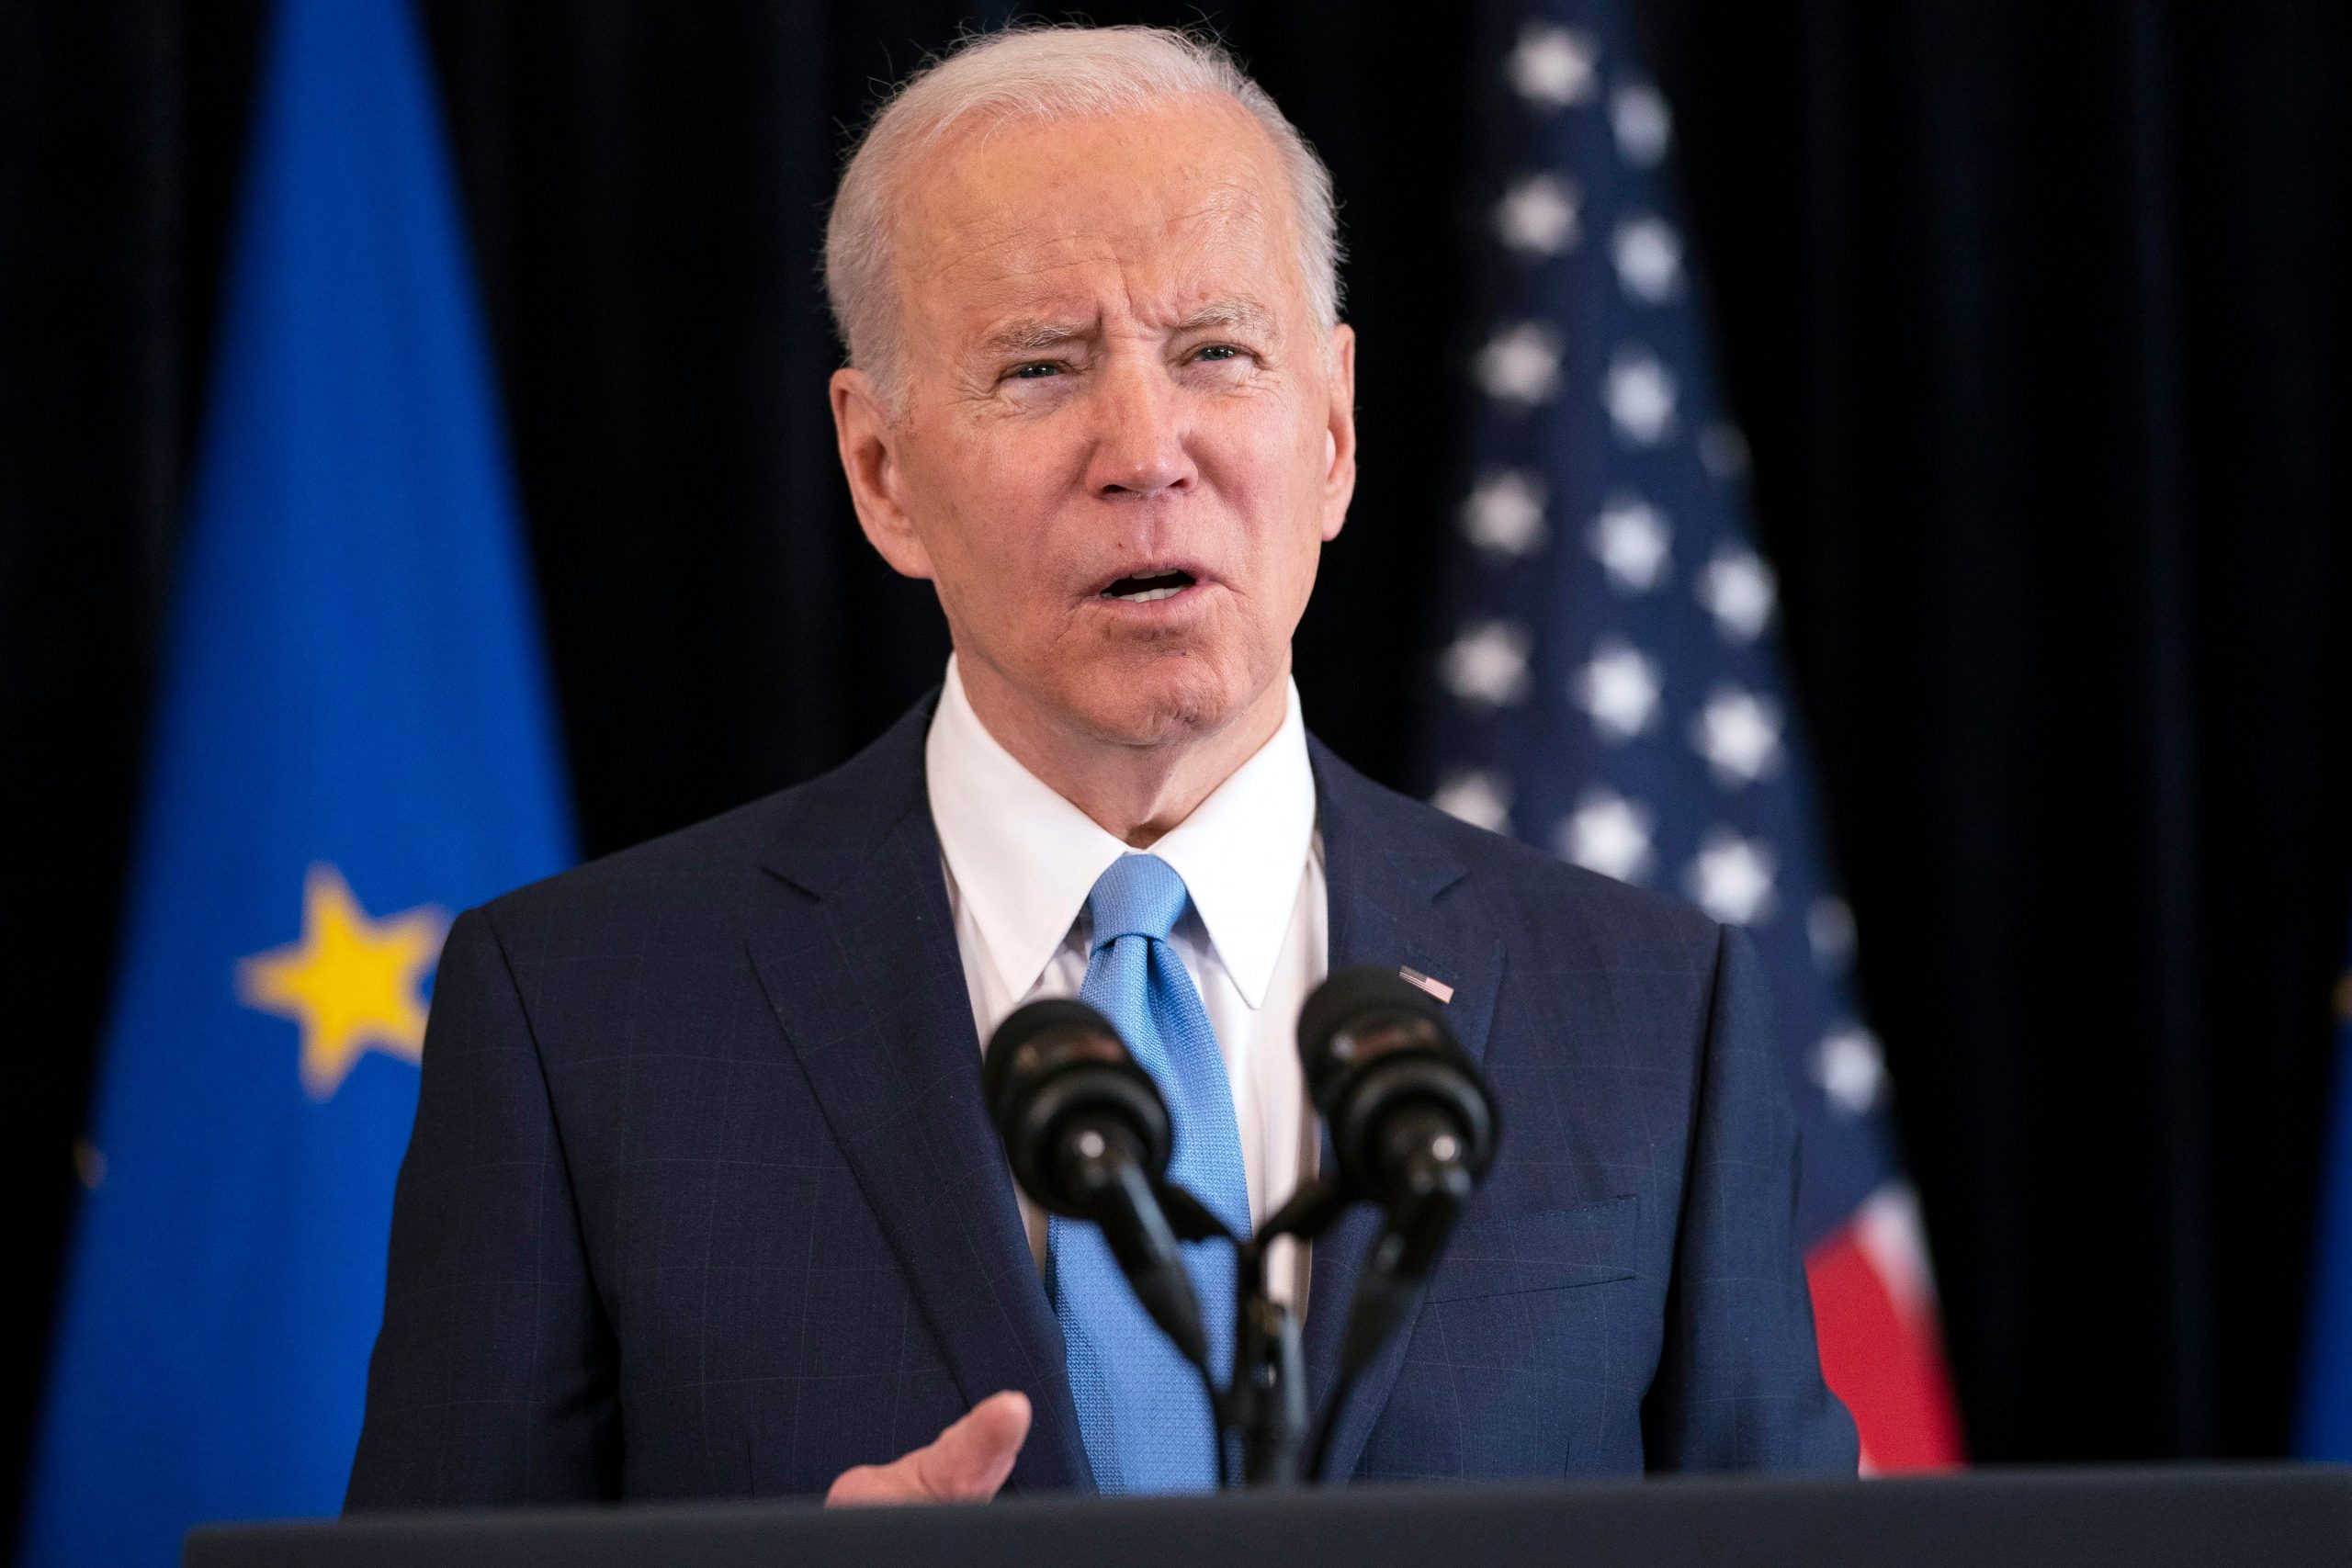 US President Joe Biden plans to trim $1 trillion from deficits over next decade